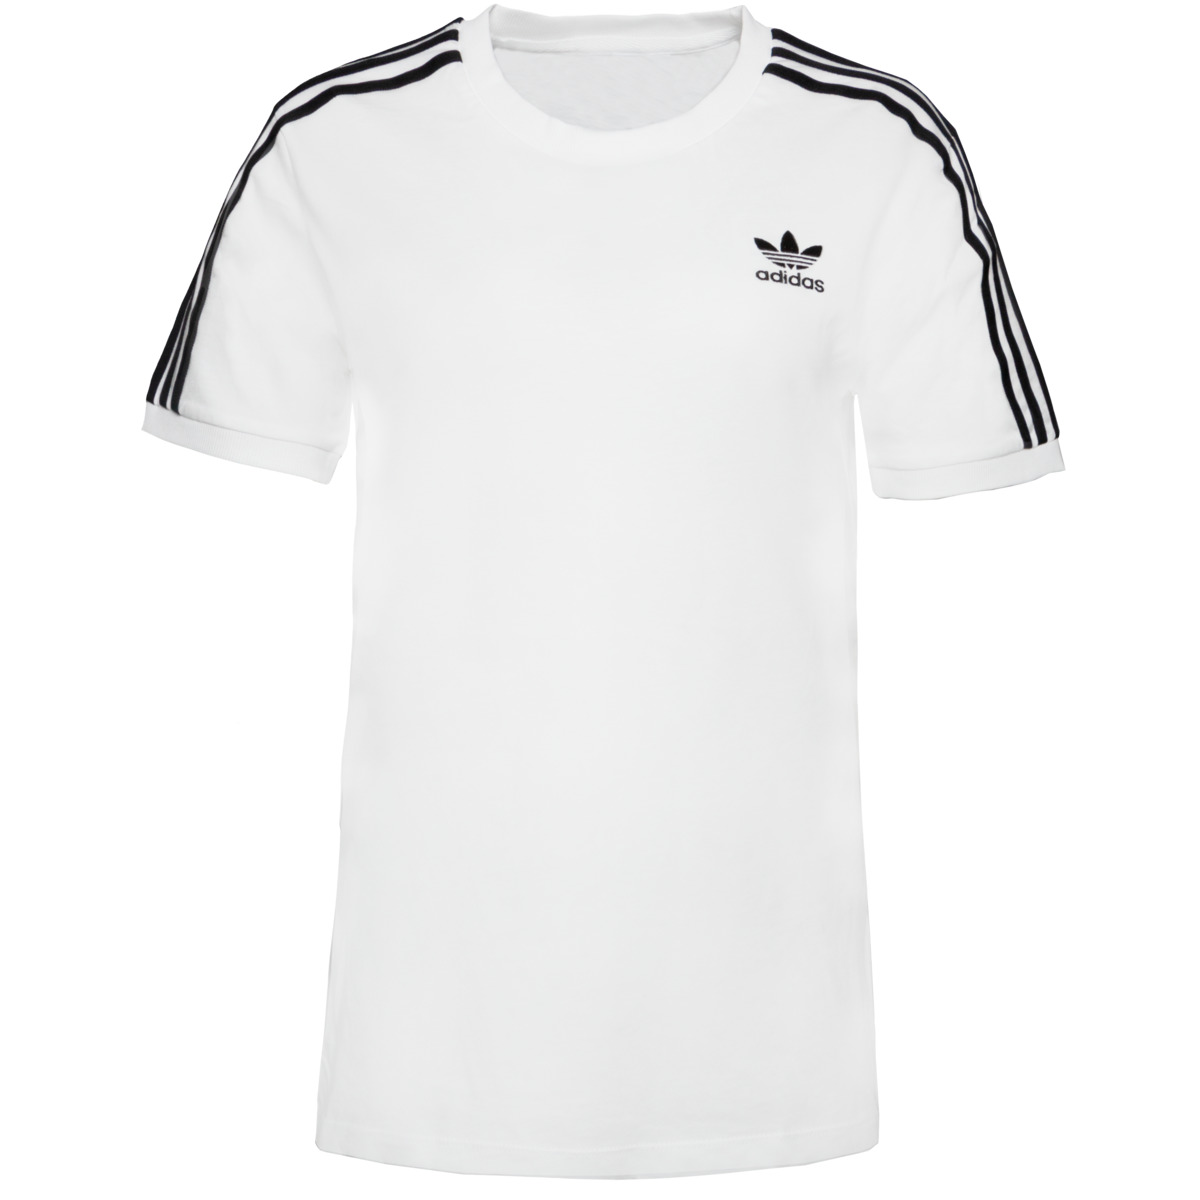 Adidas 3 Stripes Tee T-Shirt